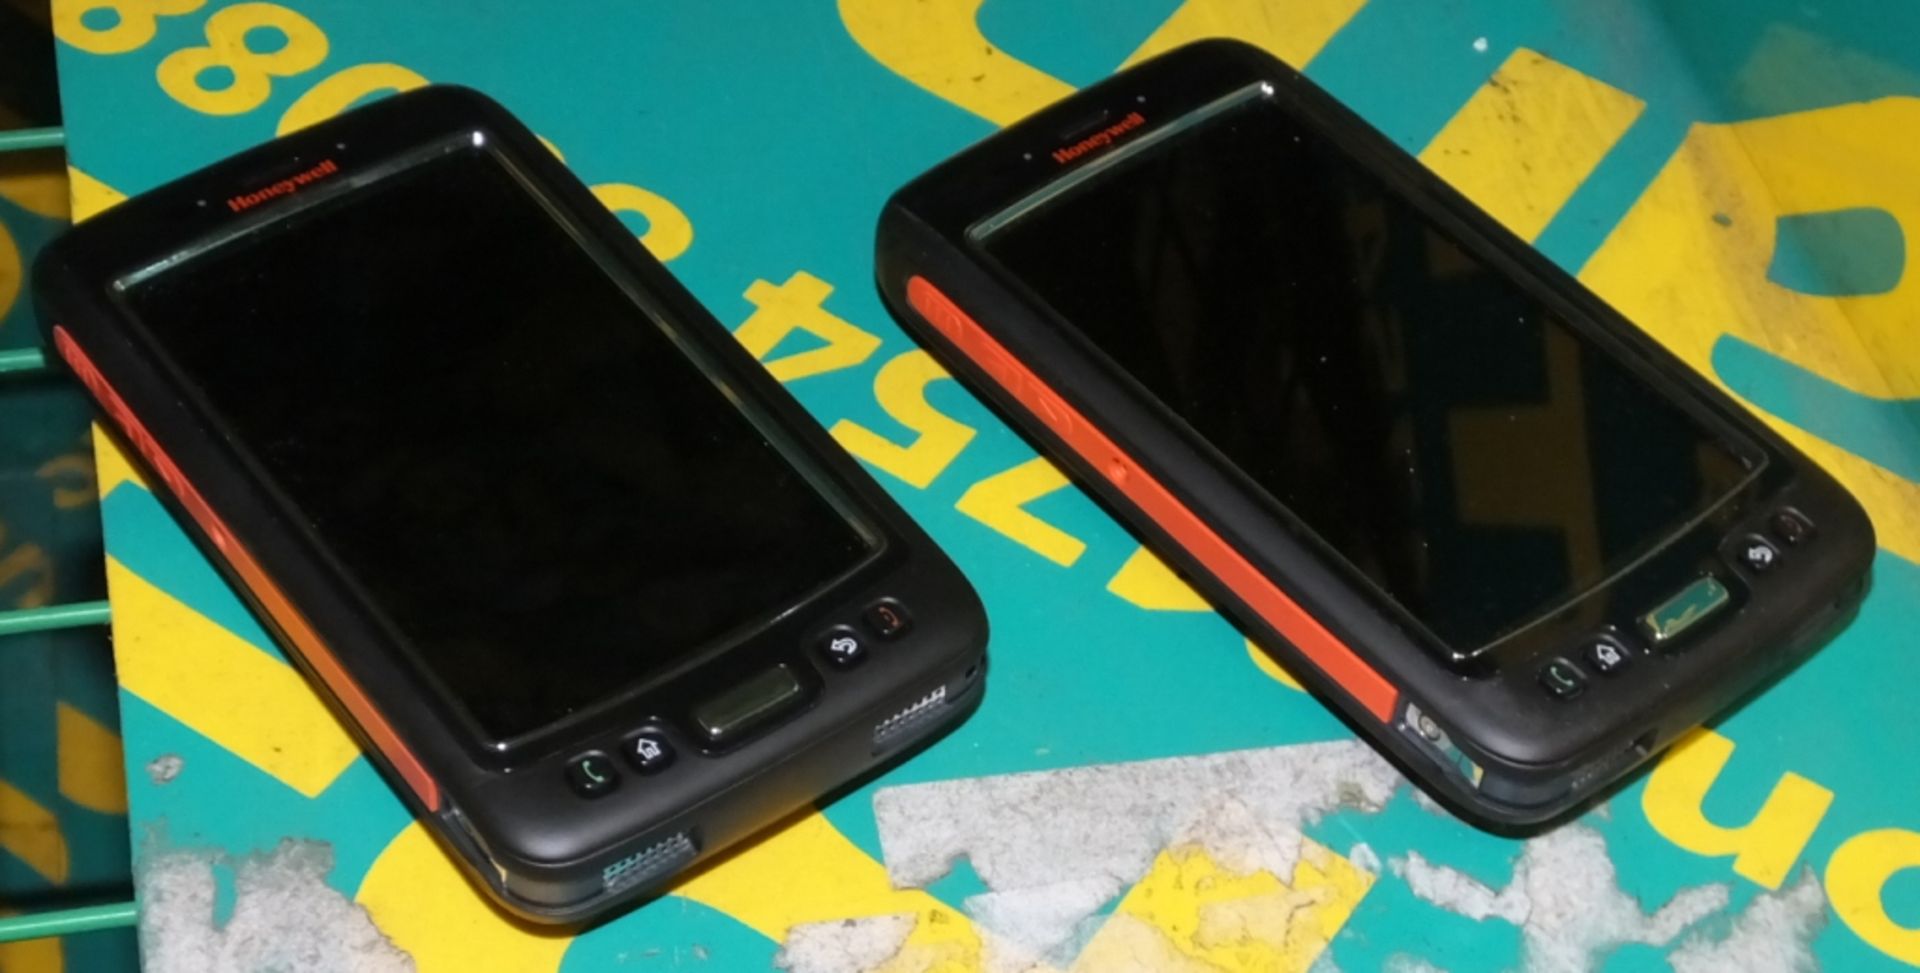 2x Honewell Dolphin 70e - Handheld Phones